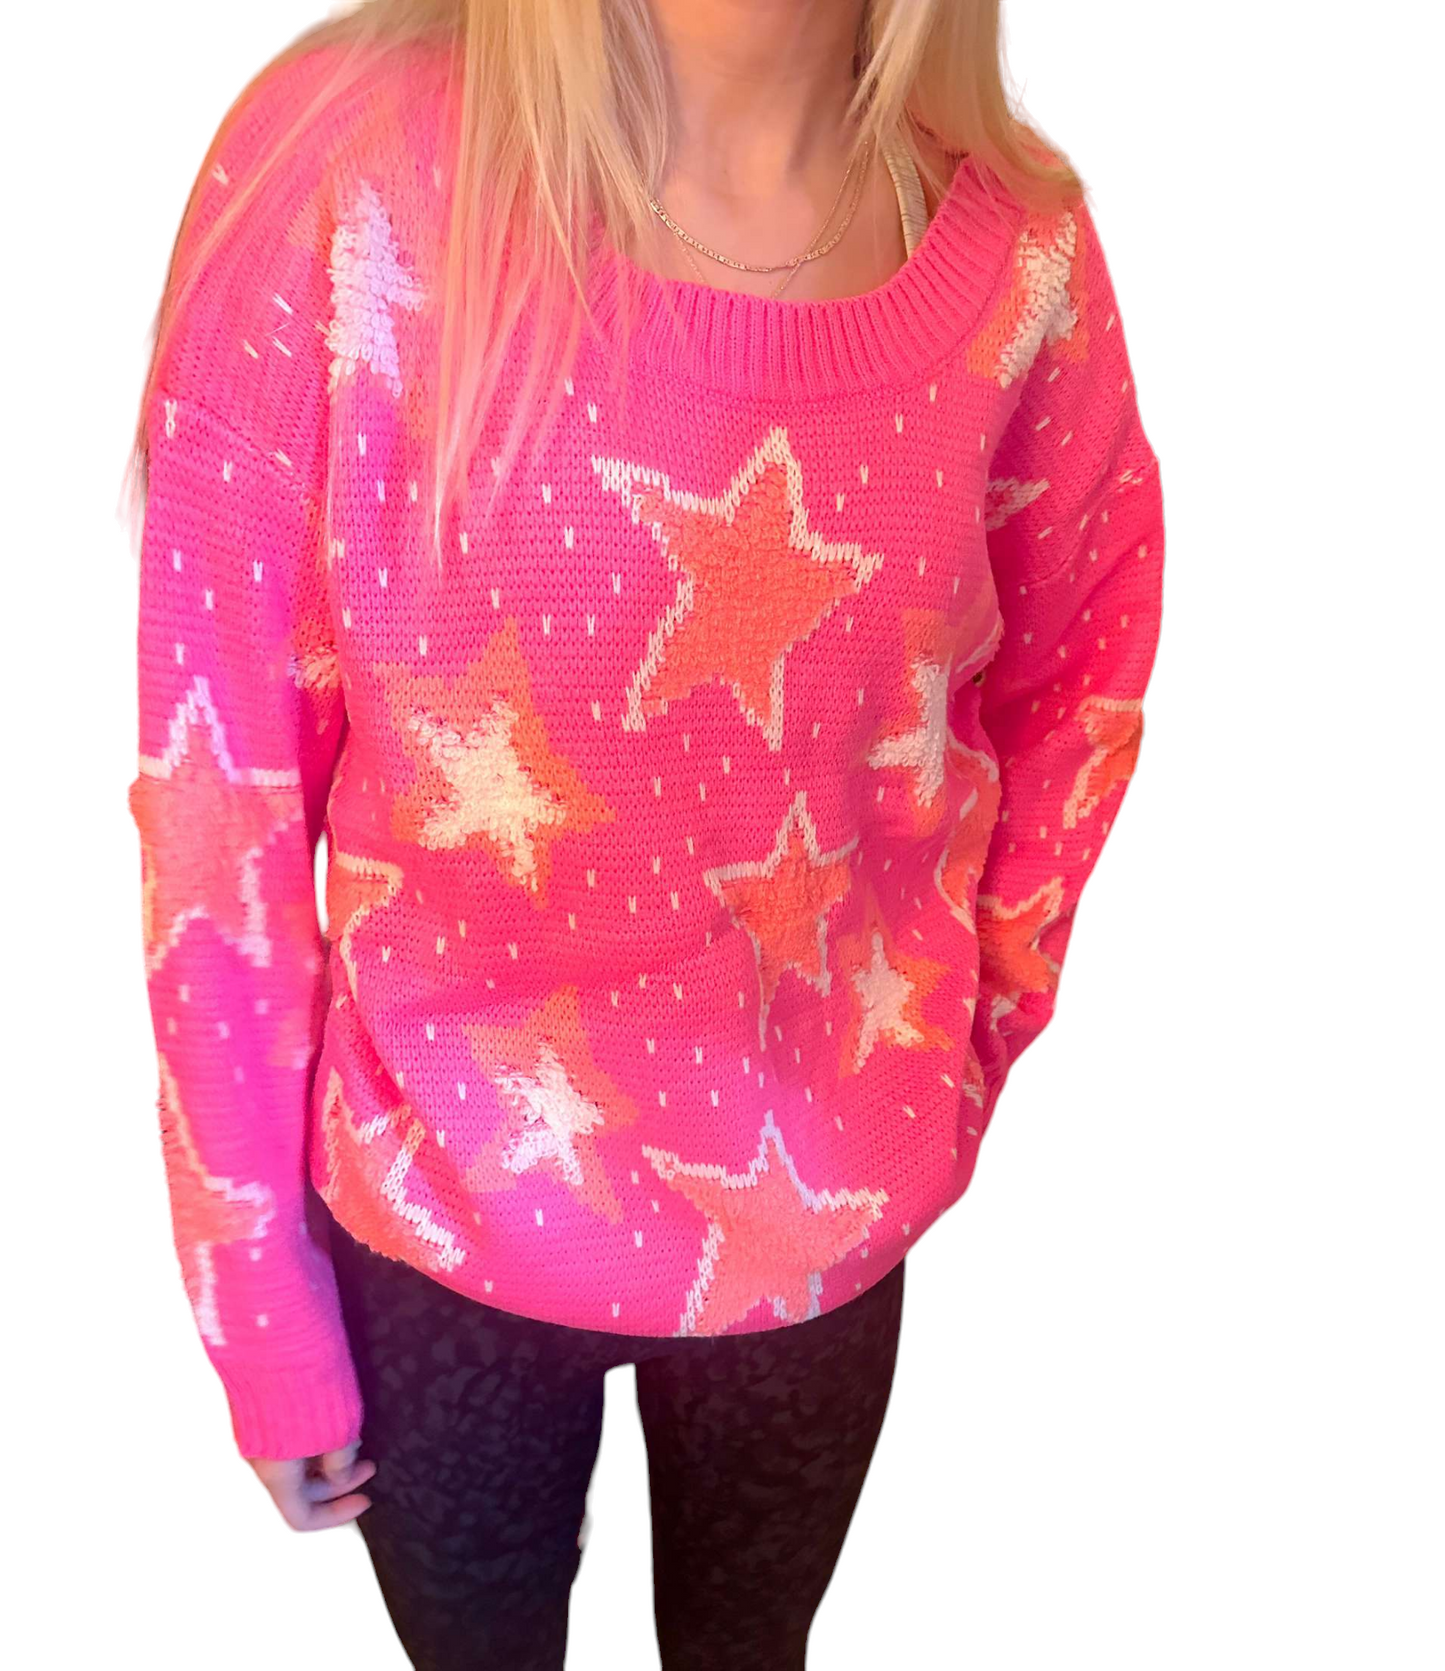 Starbright sweater